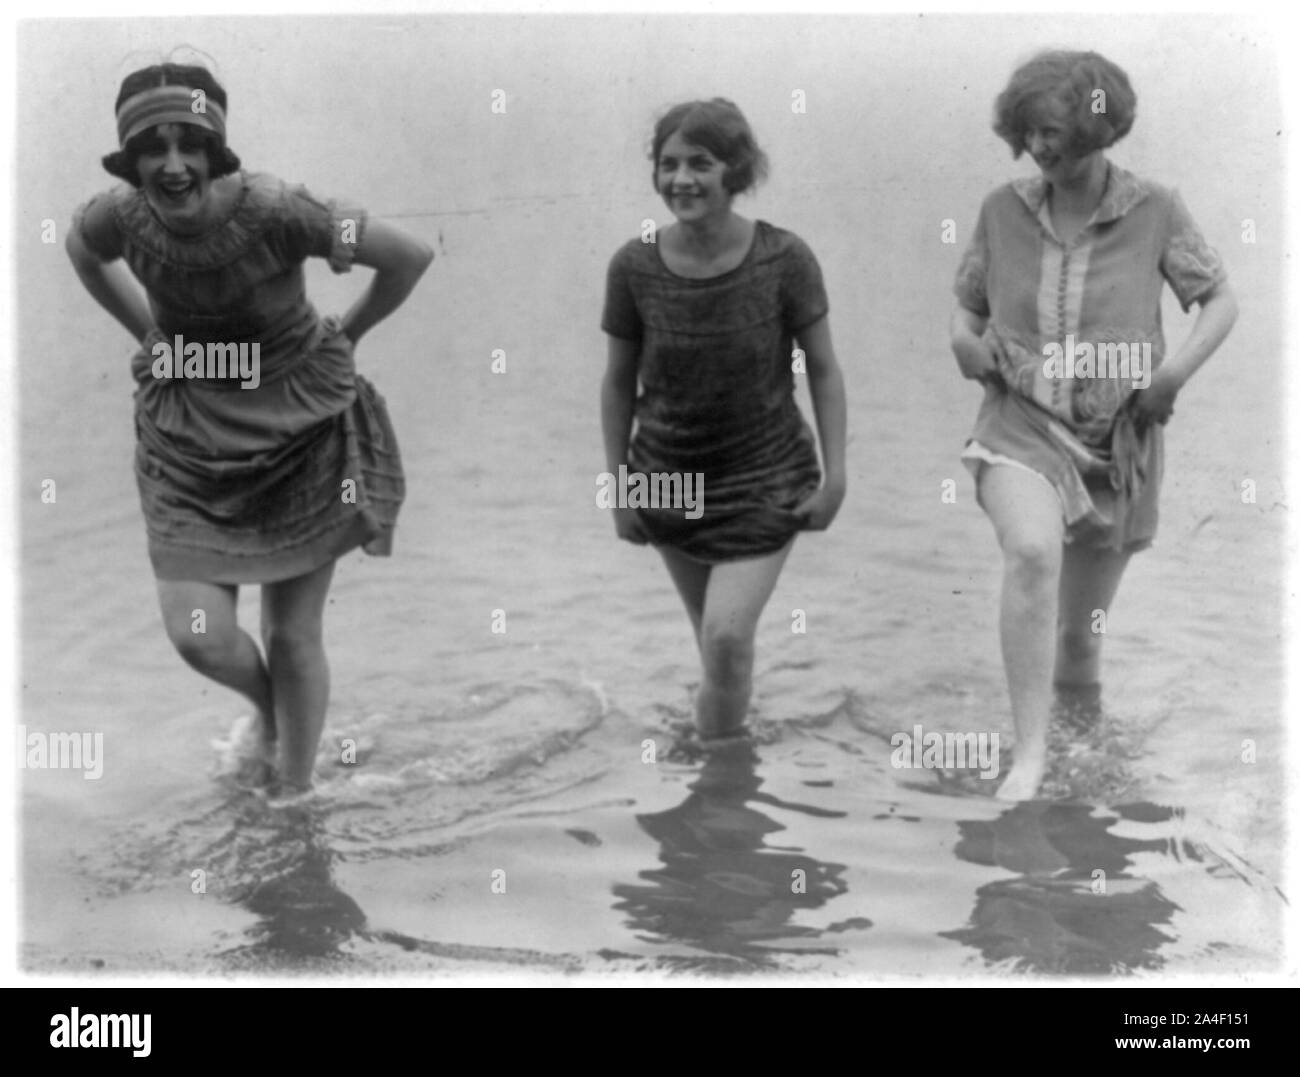 Three models from Washington's spring fashion show [wading] snapped at Arlington Beach Stock Photo